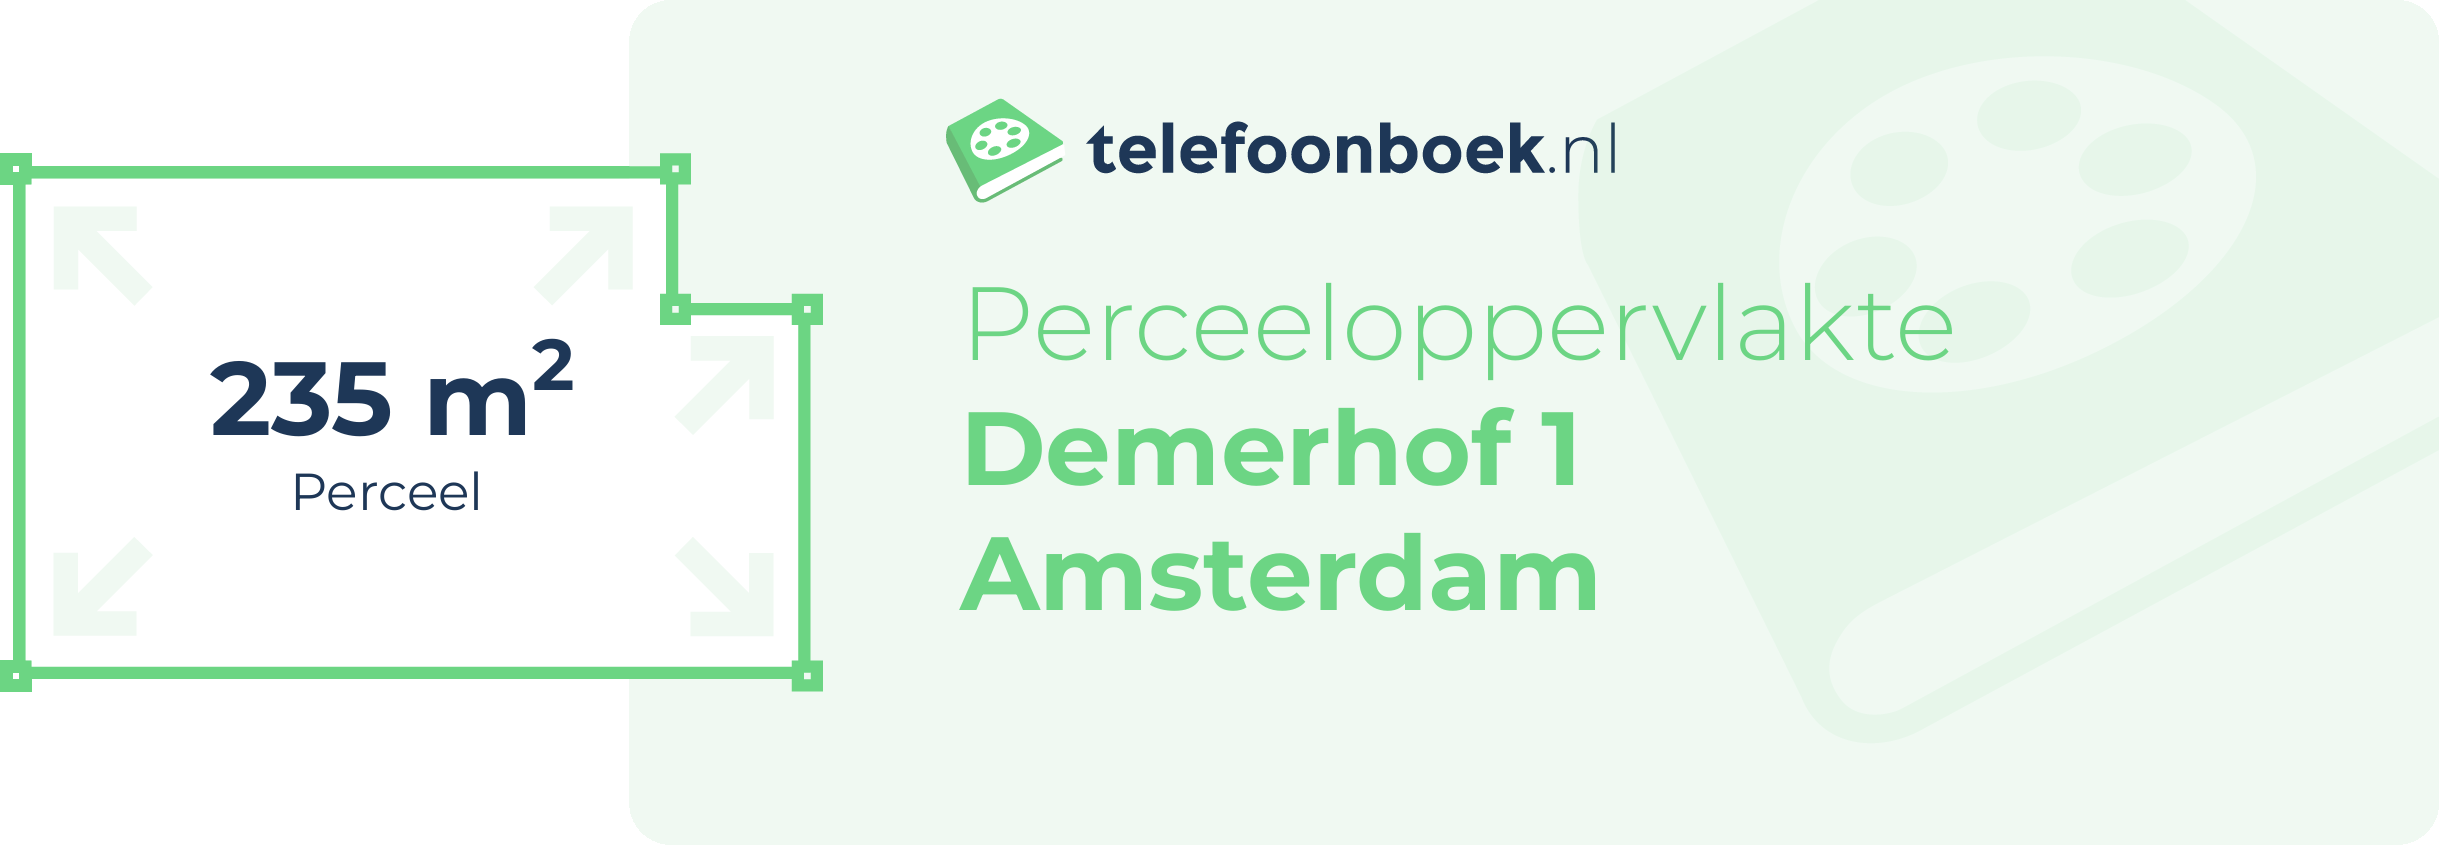 Perceeloppervlakte Demerhof 1 Amsterdam